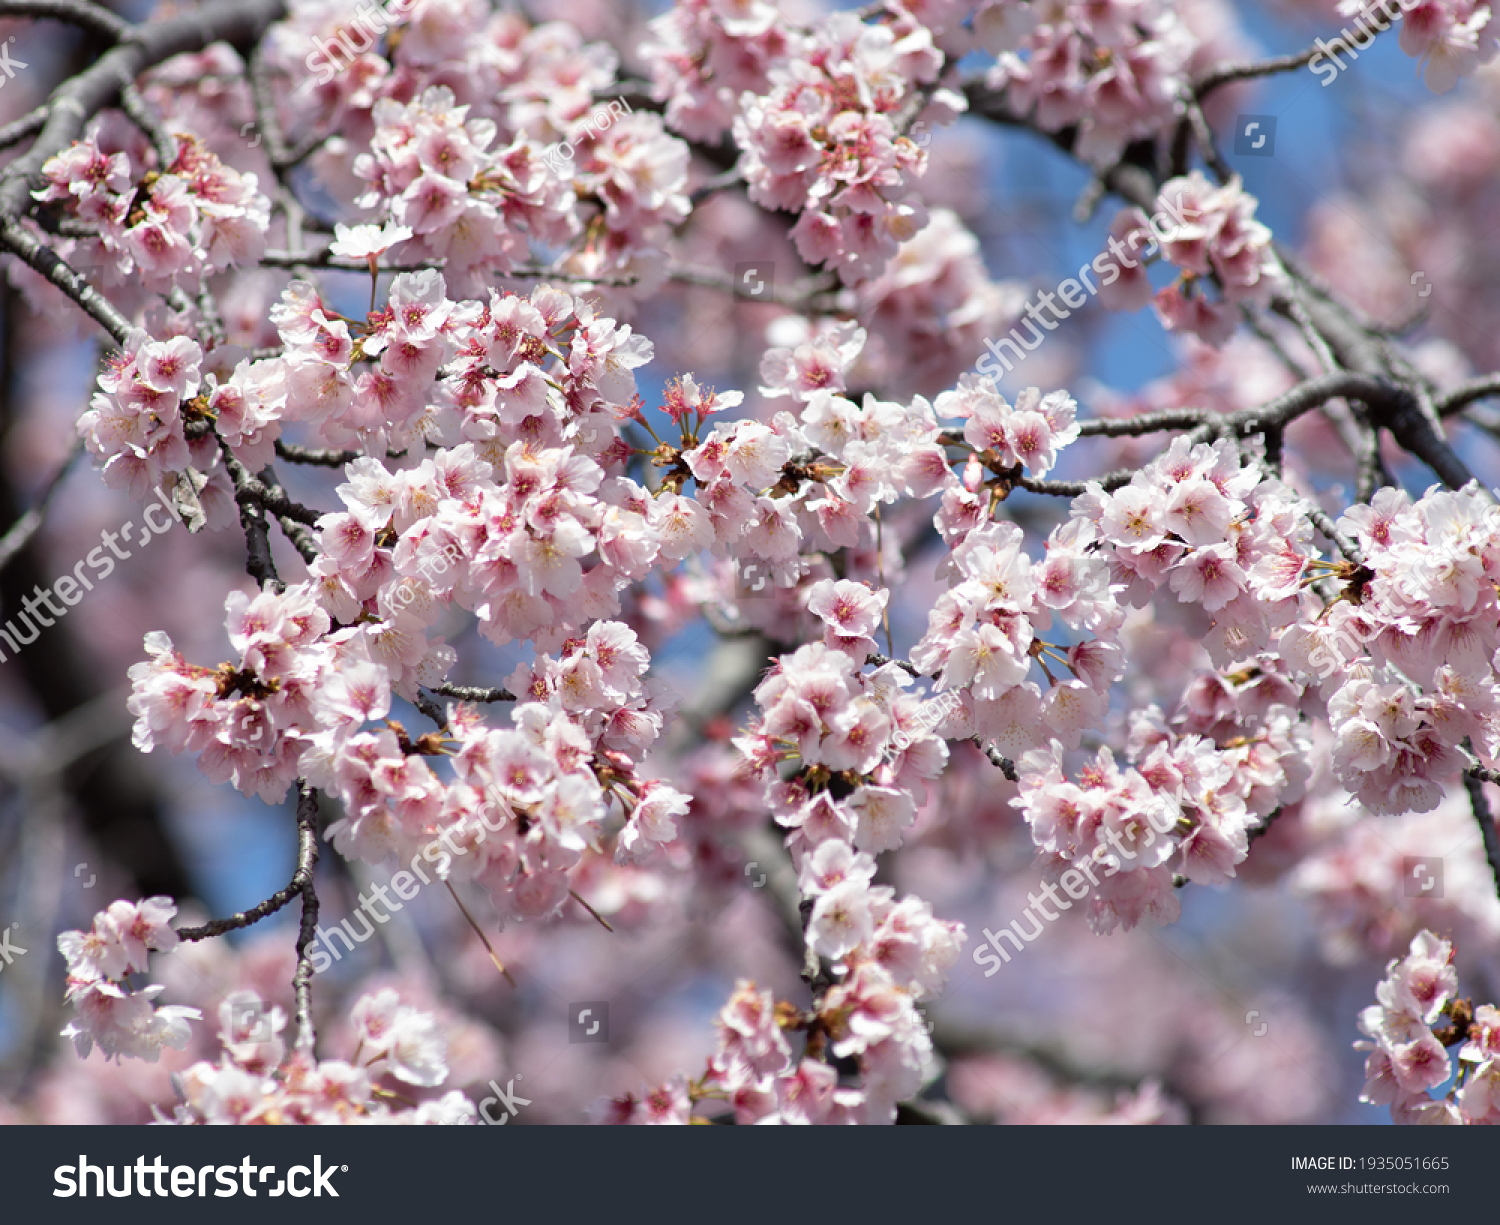 Cherry blossoms in full bloom. A Japanese spring scene. #1935051665